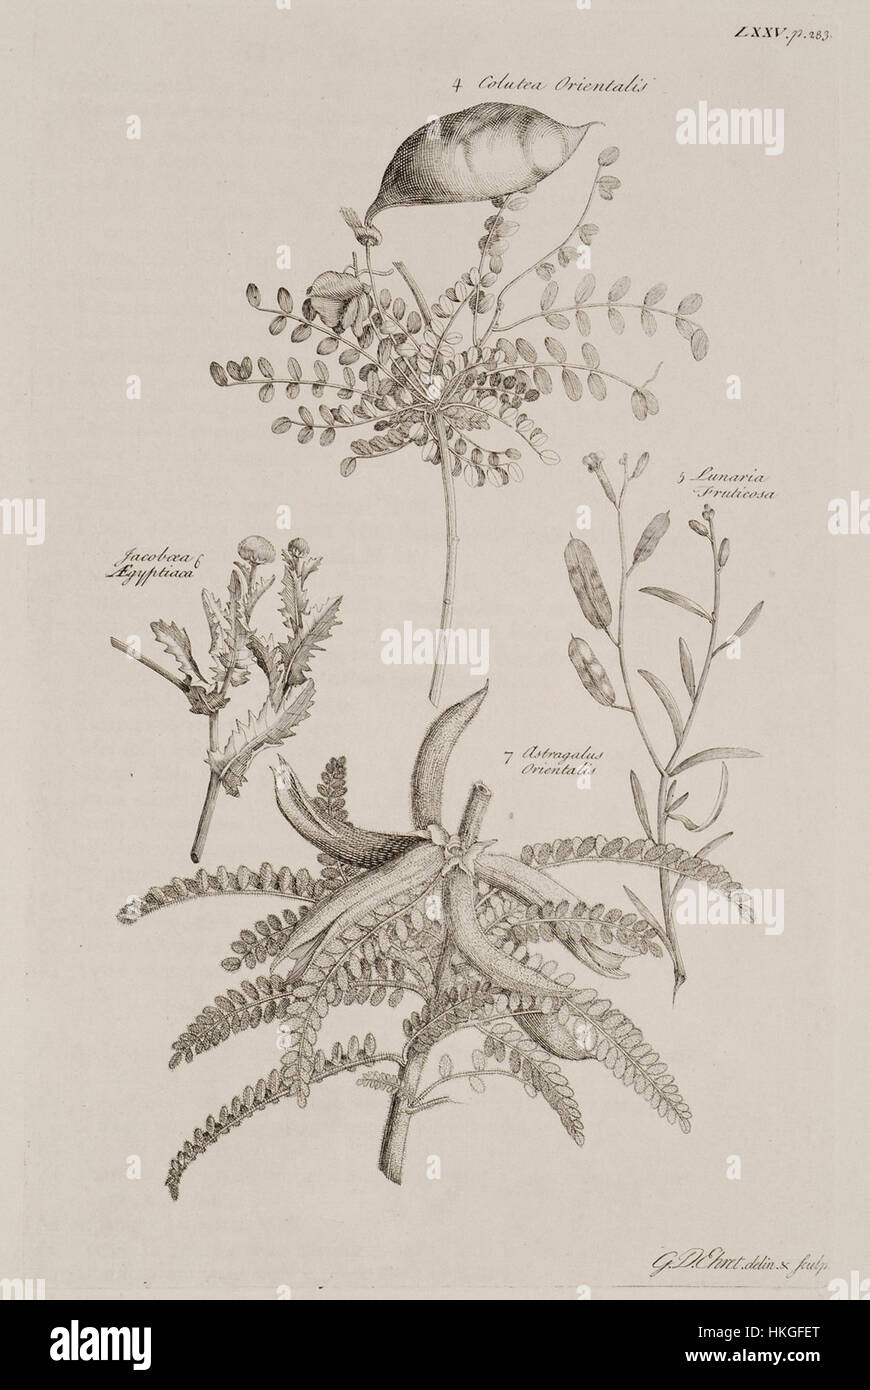 4 Colutea orientalis 5 Lunaria Fruticosa 6 Jacoboea Aegyptiaca 7 Astragalus orientalis   Pococke Richard   1743 Stock Photo